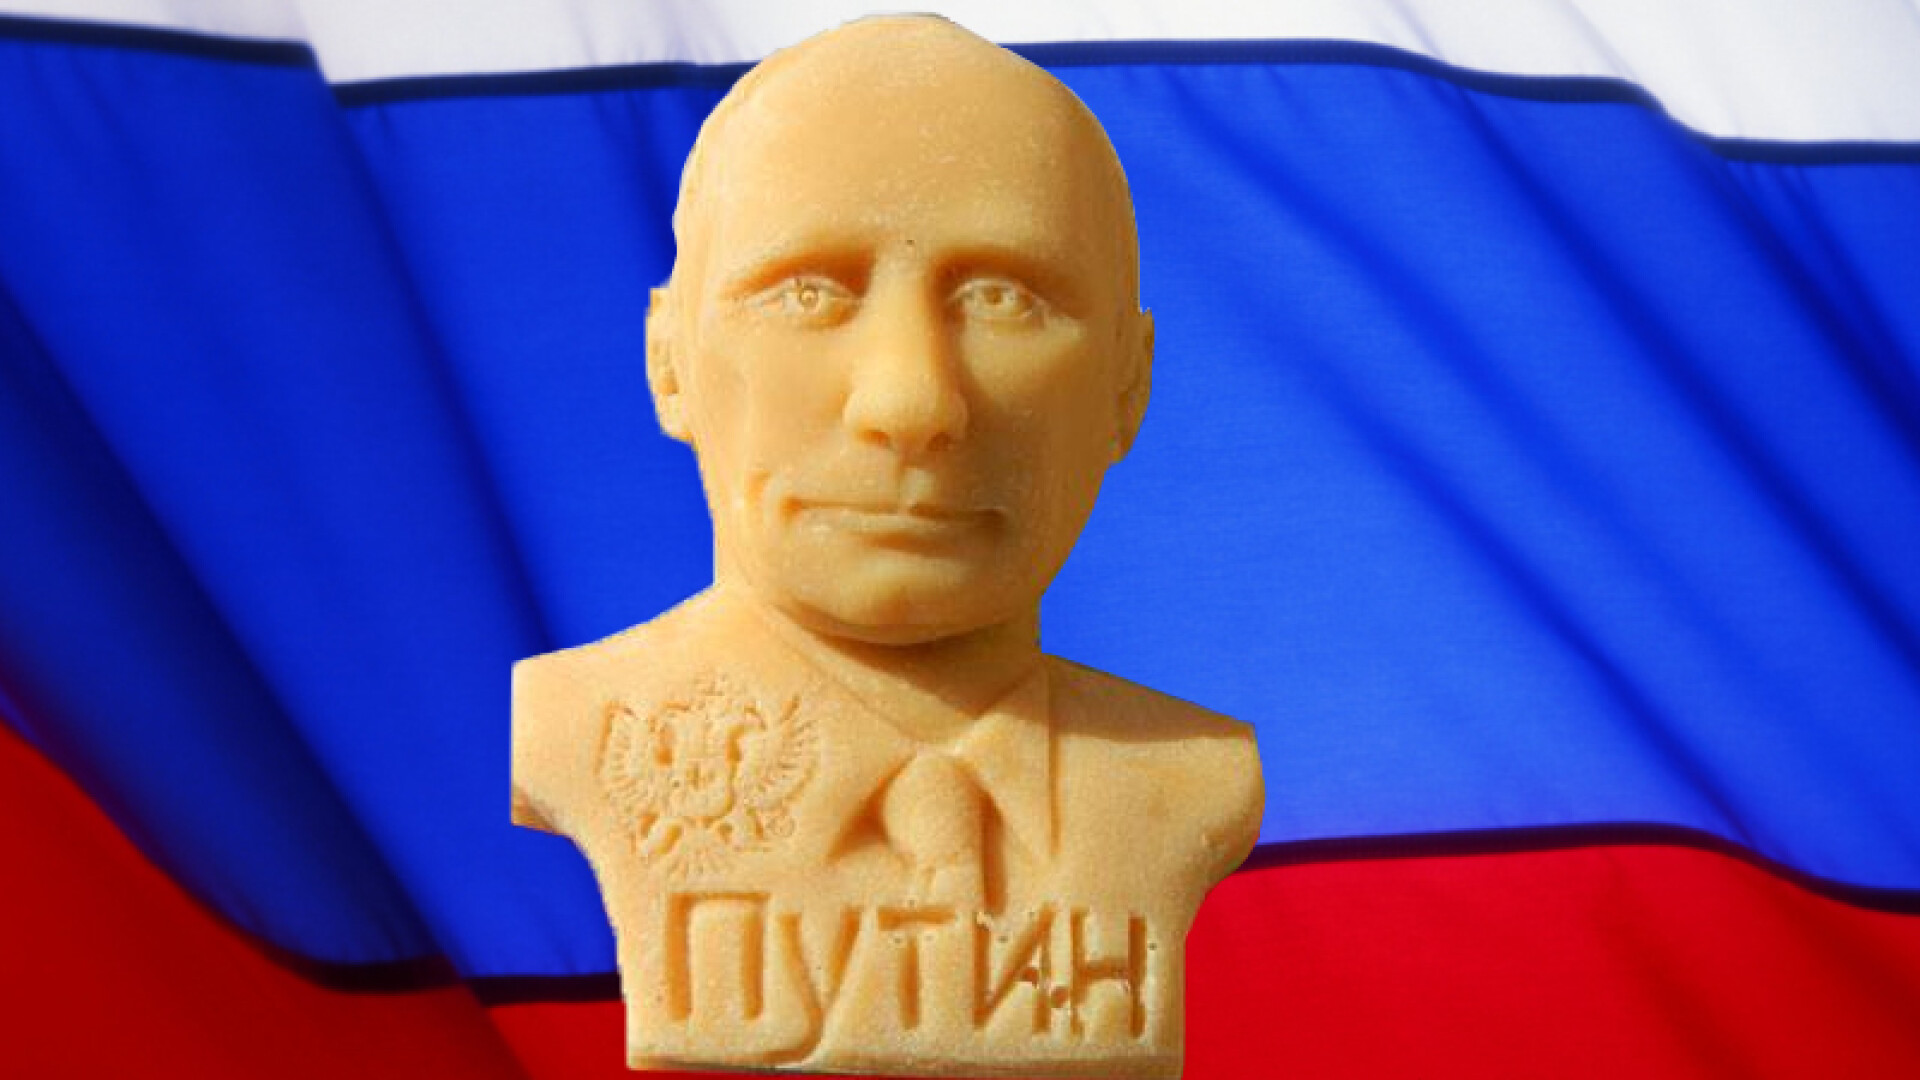 sapunul Putin